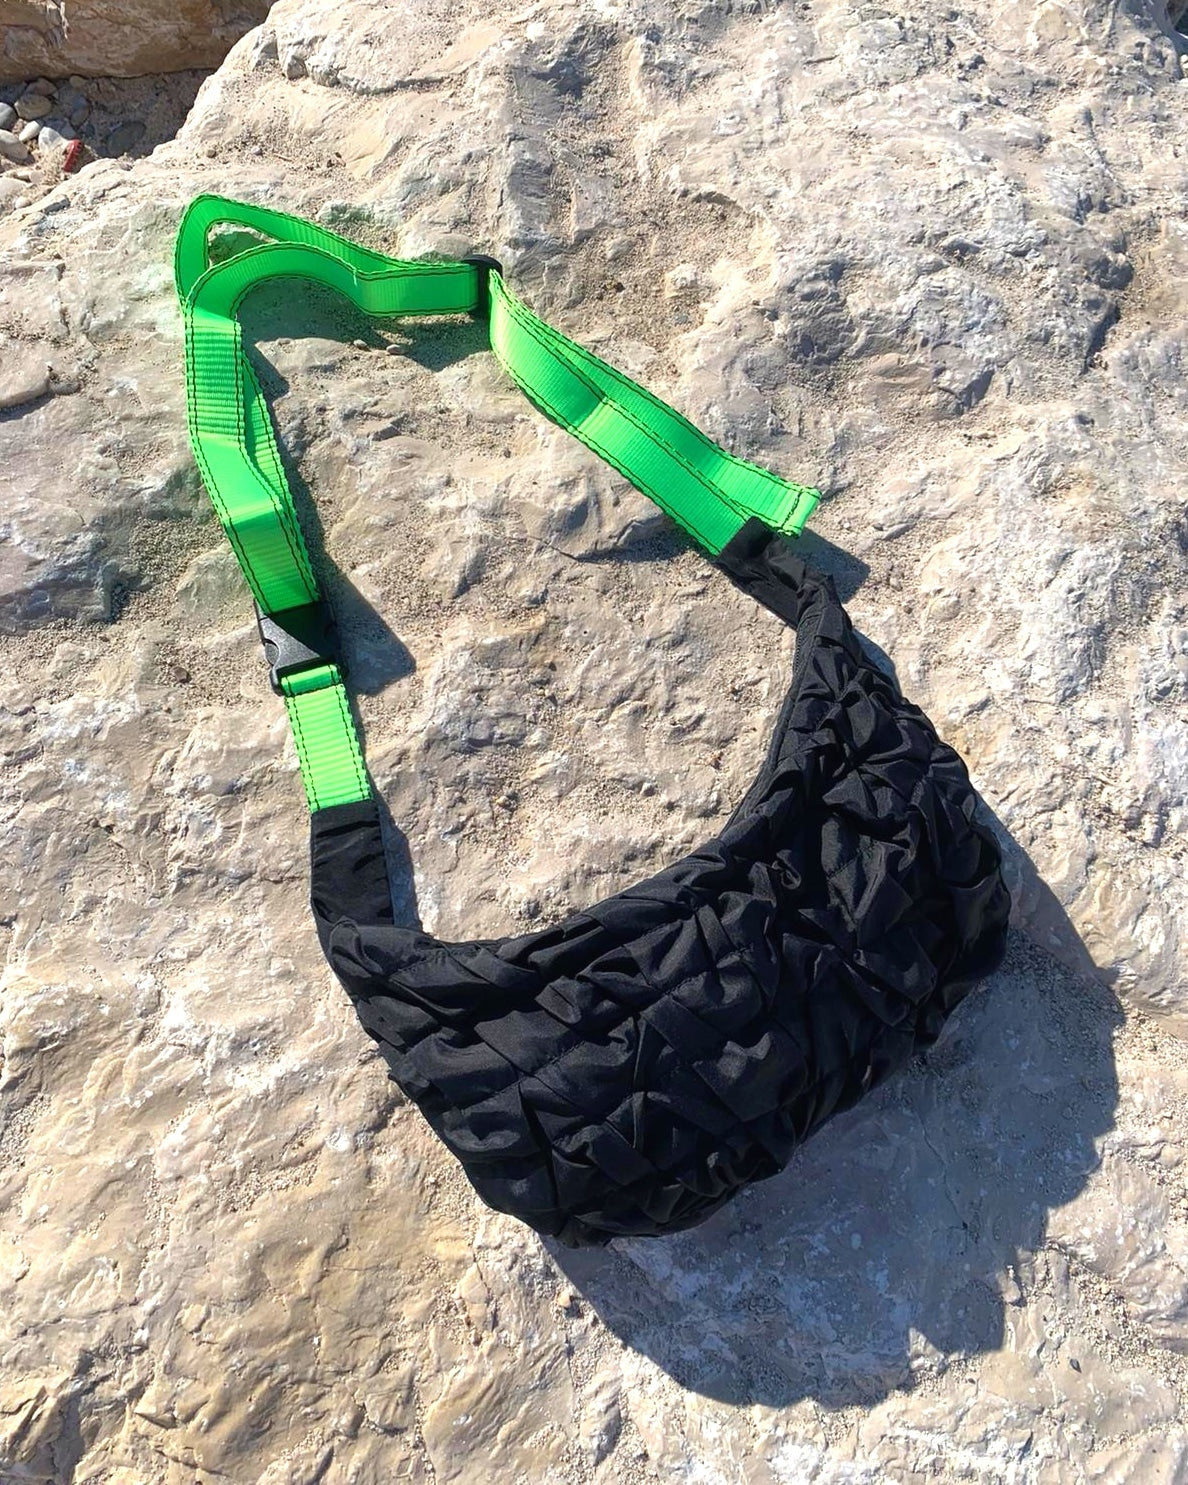 MARJ nylon bum bag upcycling deadstock black neon green recycled